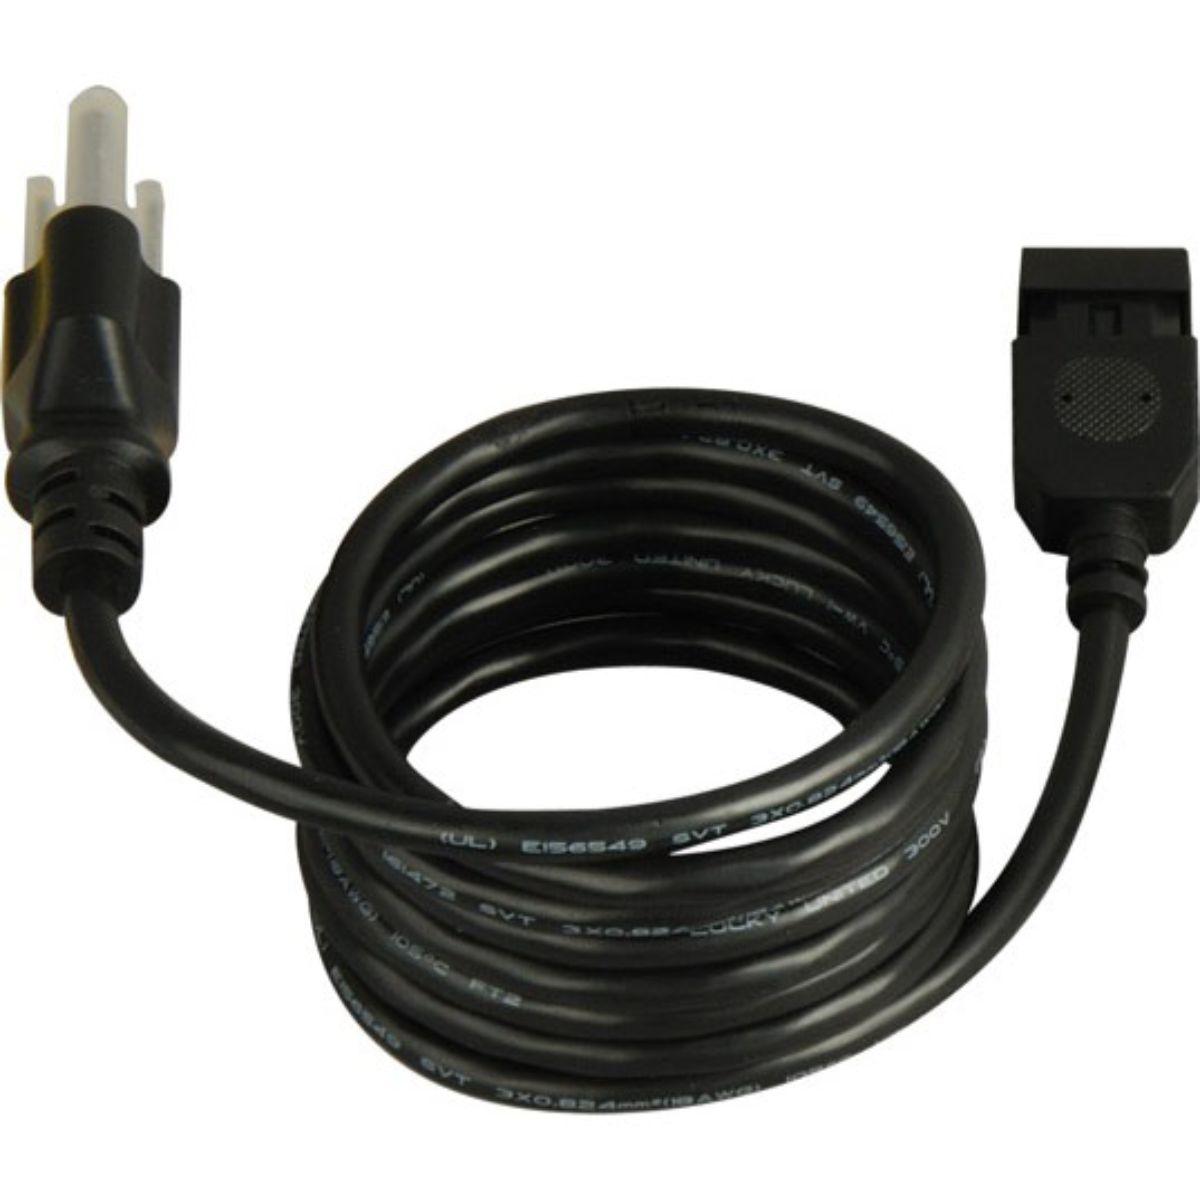 CounterMax 72in. Power Cord, Black